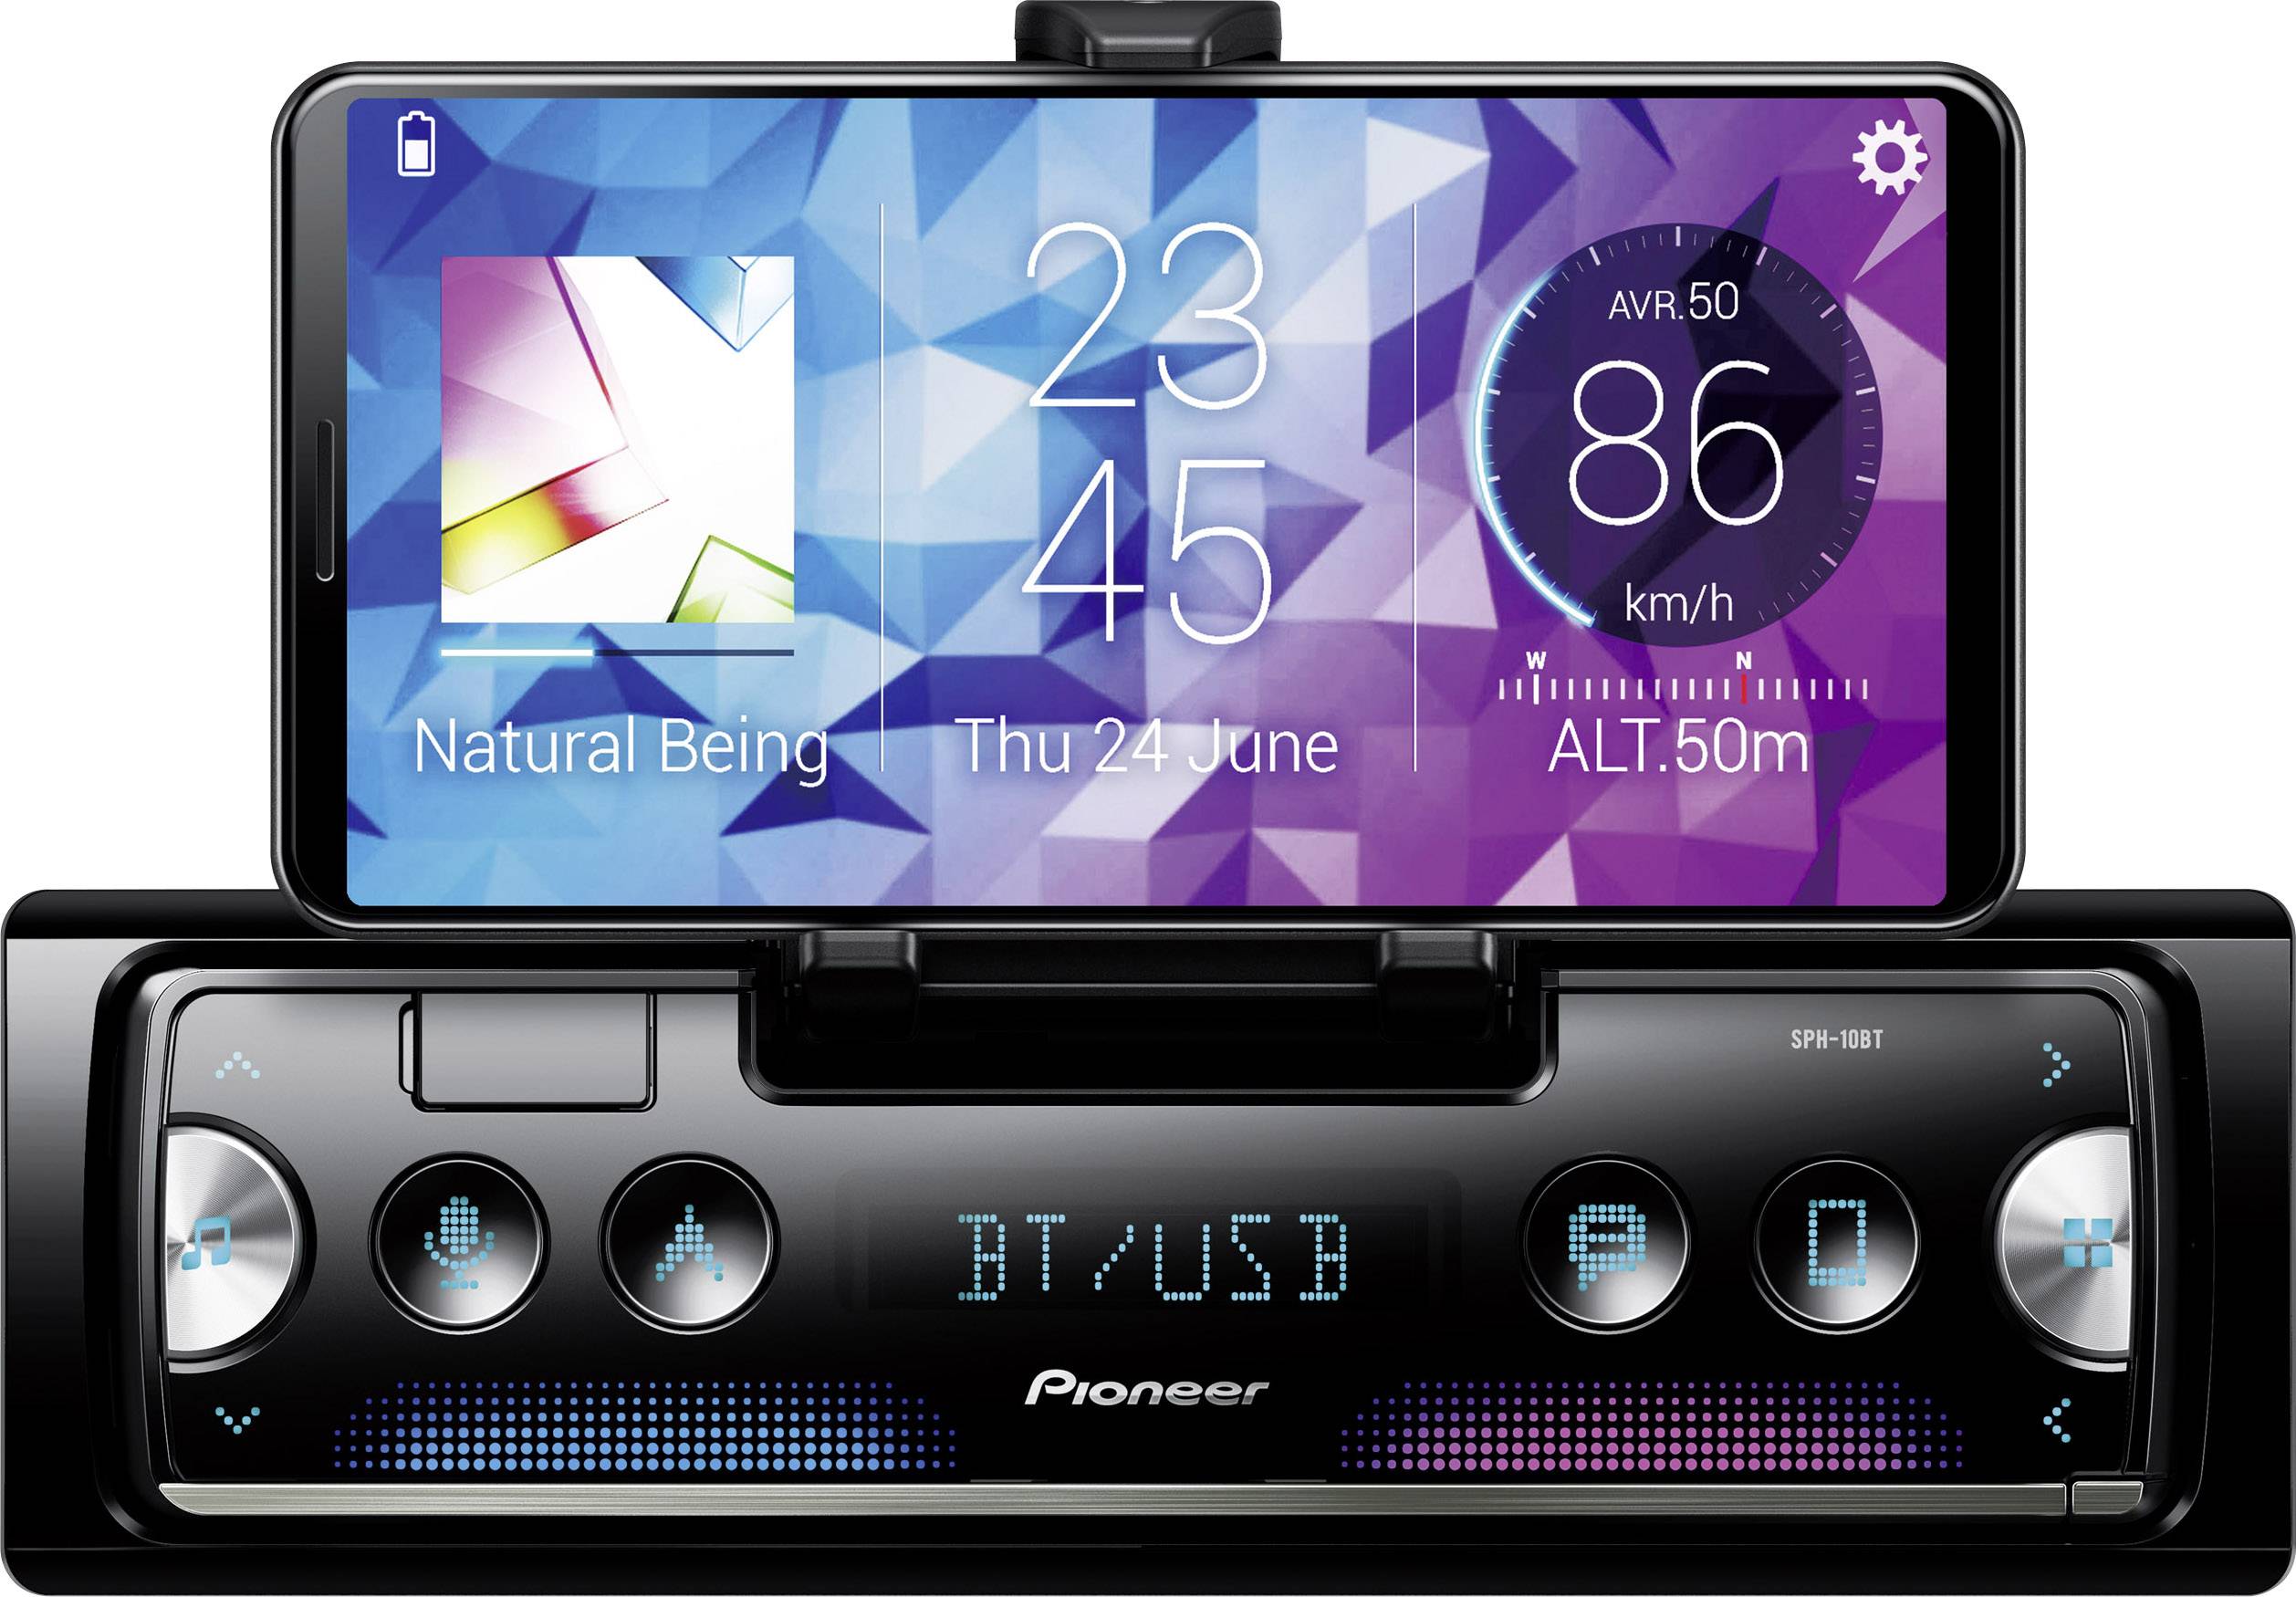 Pioneer Car stereo AppRadio, Bluetooth handsfree set